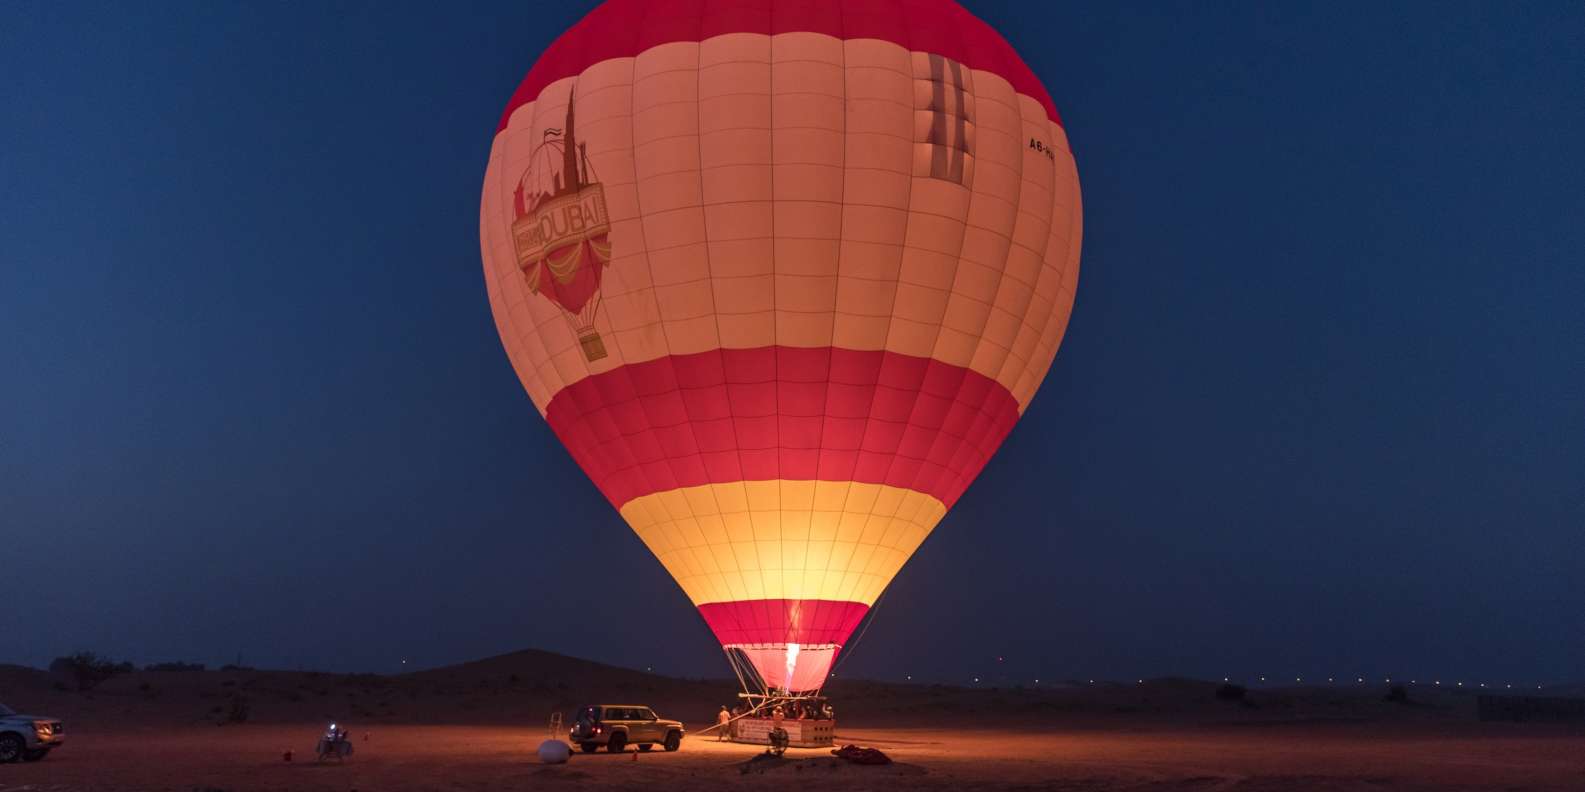 Dubai: Hot Air Balloon Ride Over the Desert | GetYourGuide